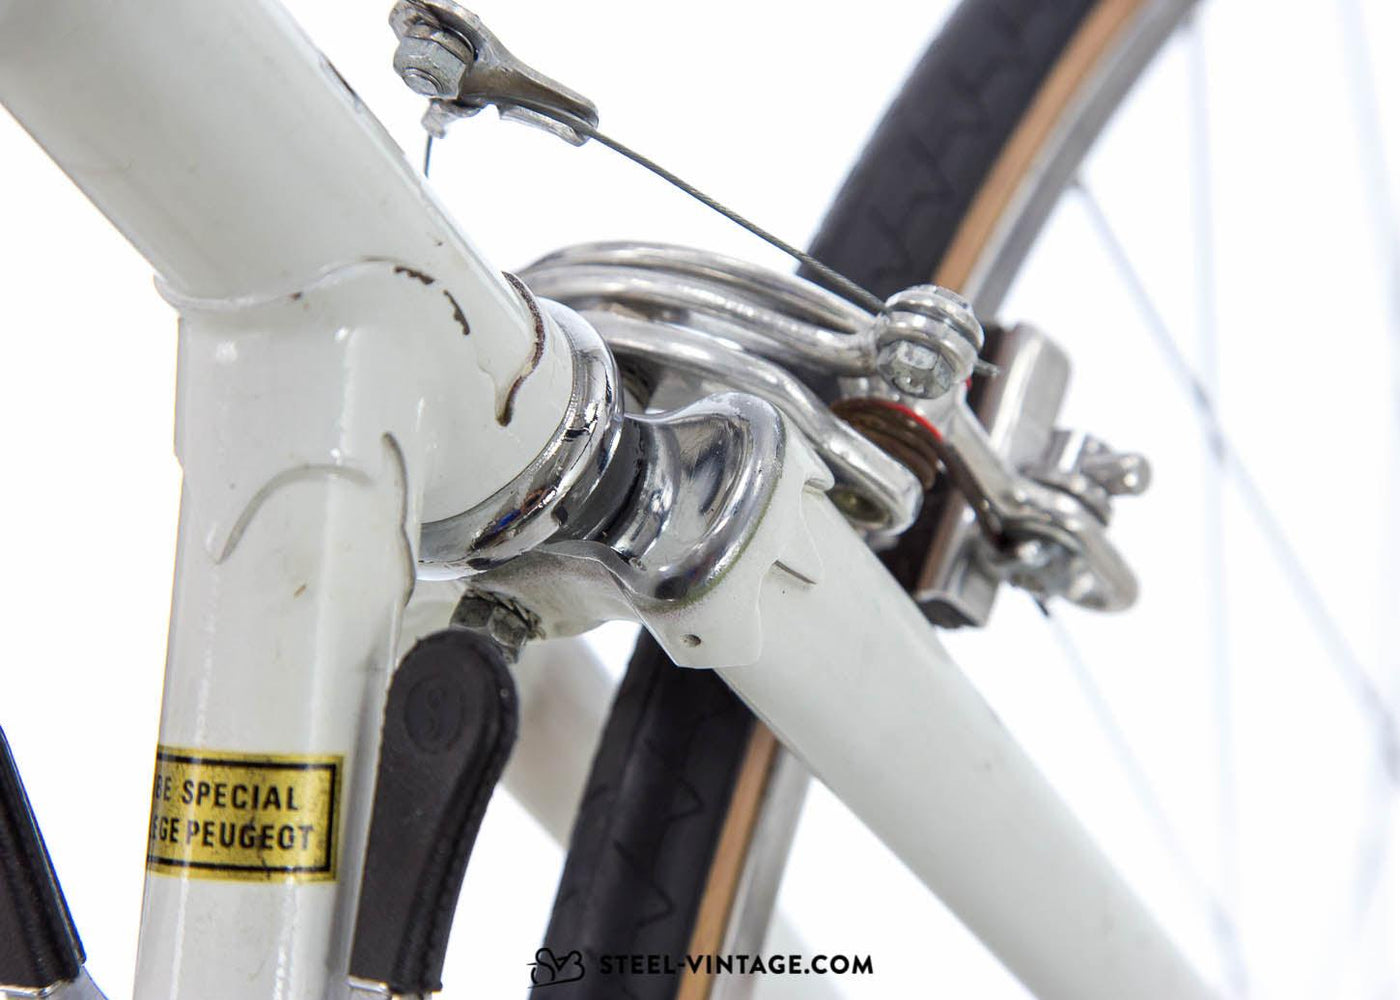 Peugeot P10 Classic Road Bike 1970s - Steel Vintage Bikes